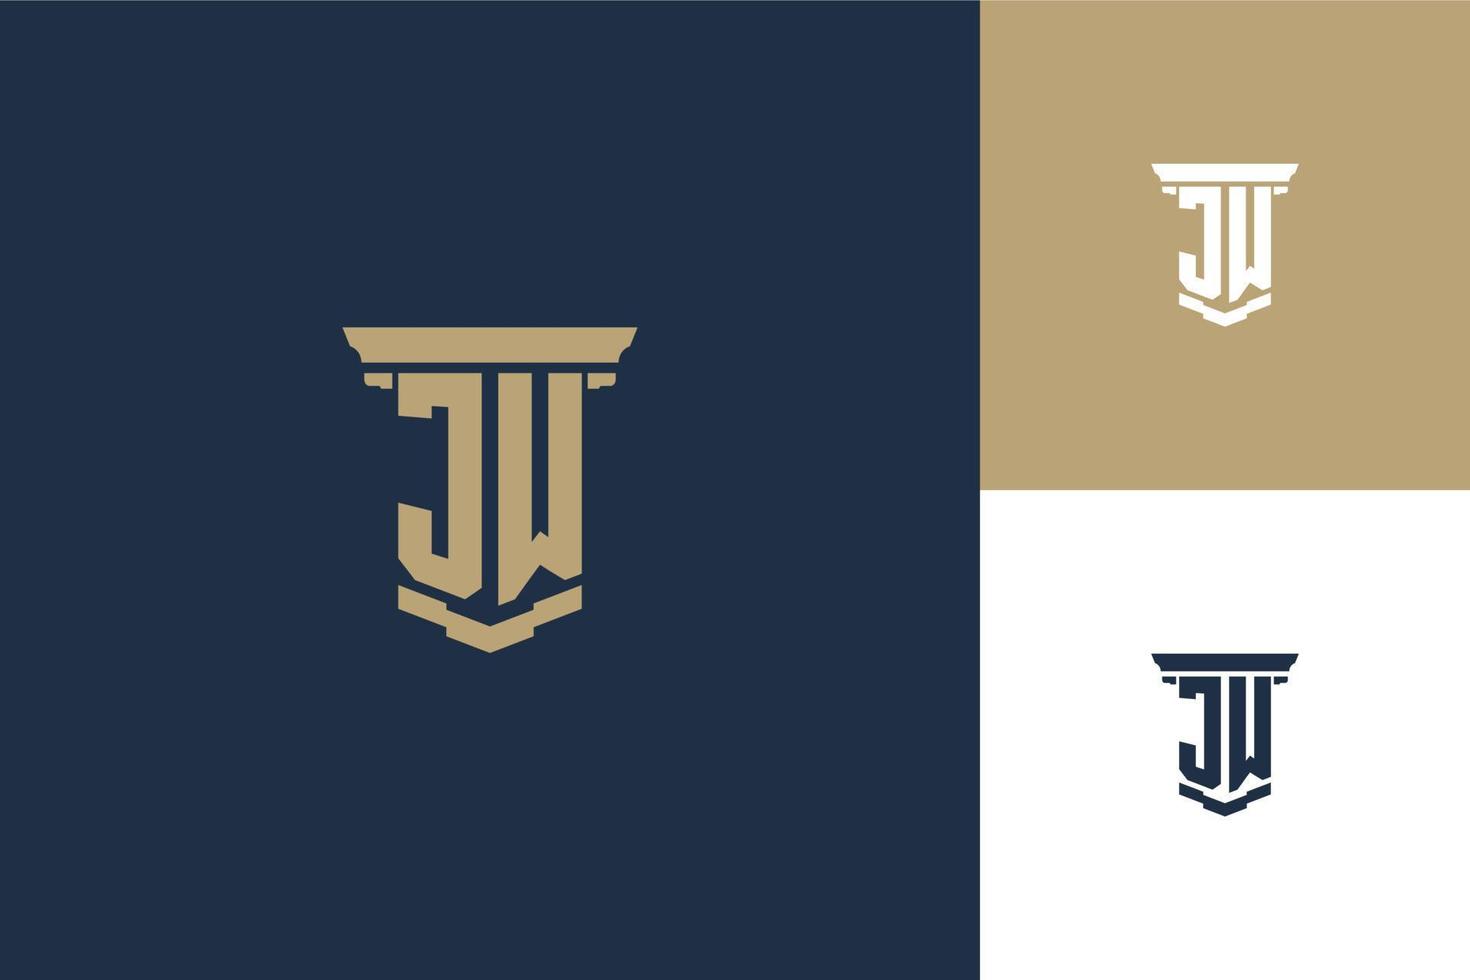 JW monogram initials logo design with pillar icon. Attorney law logo design vector